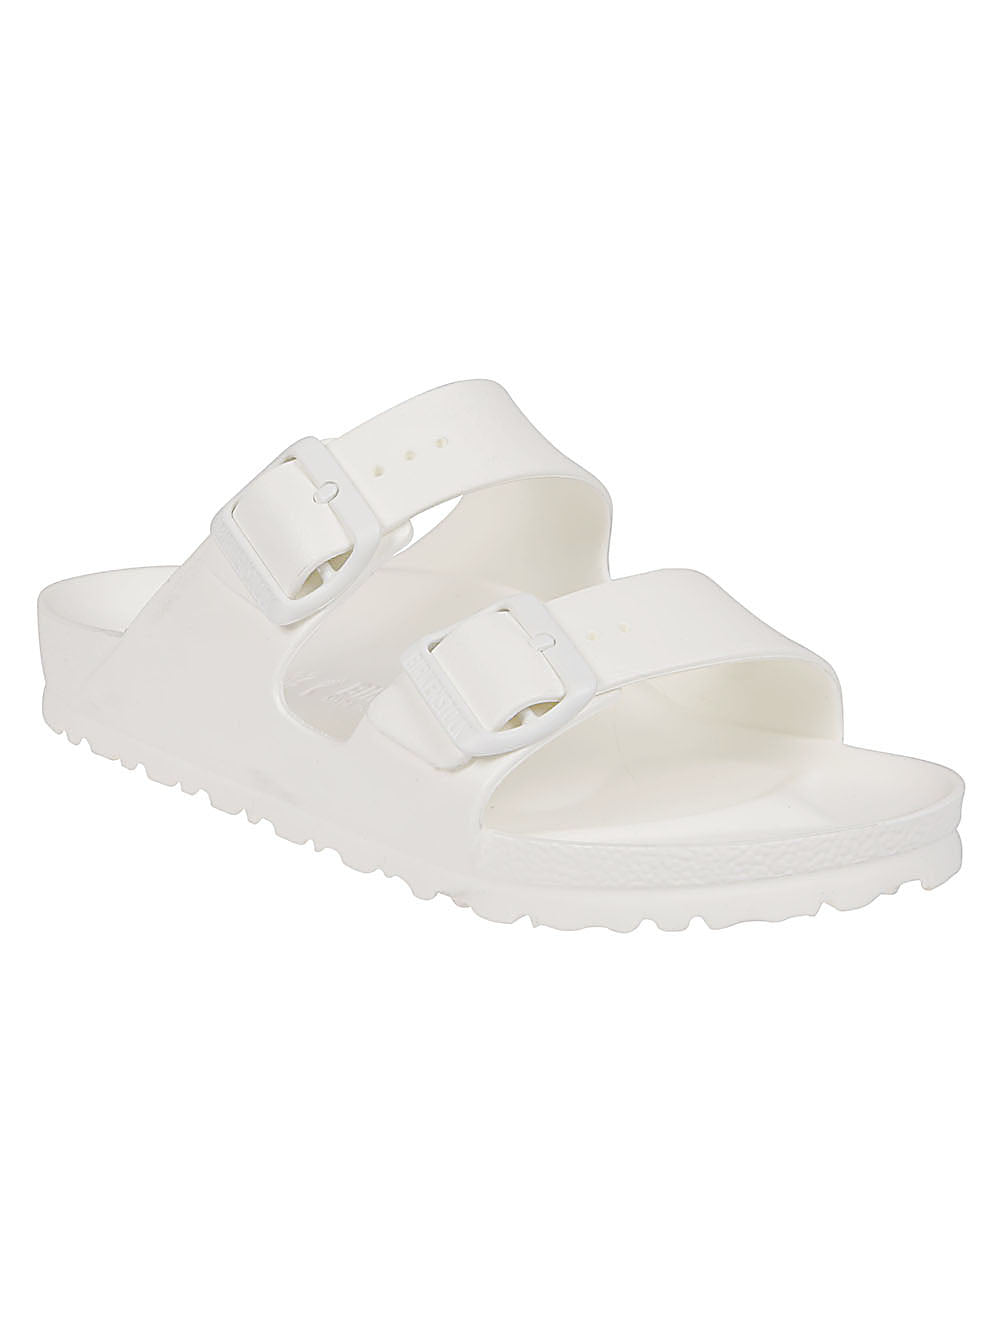 Birkenstock Sandals White